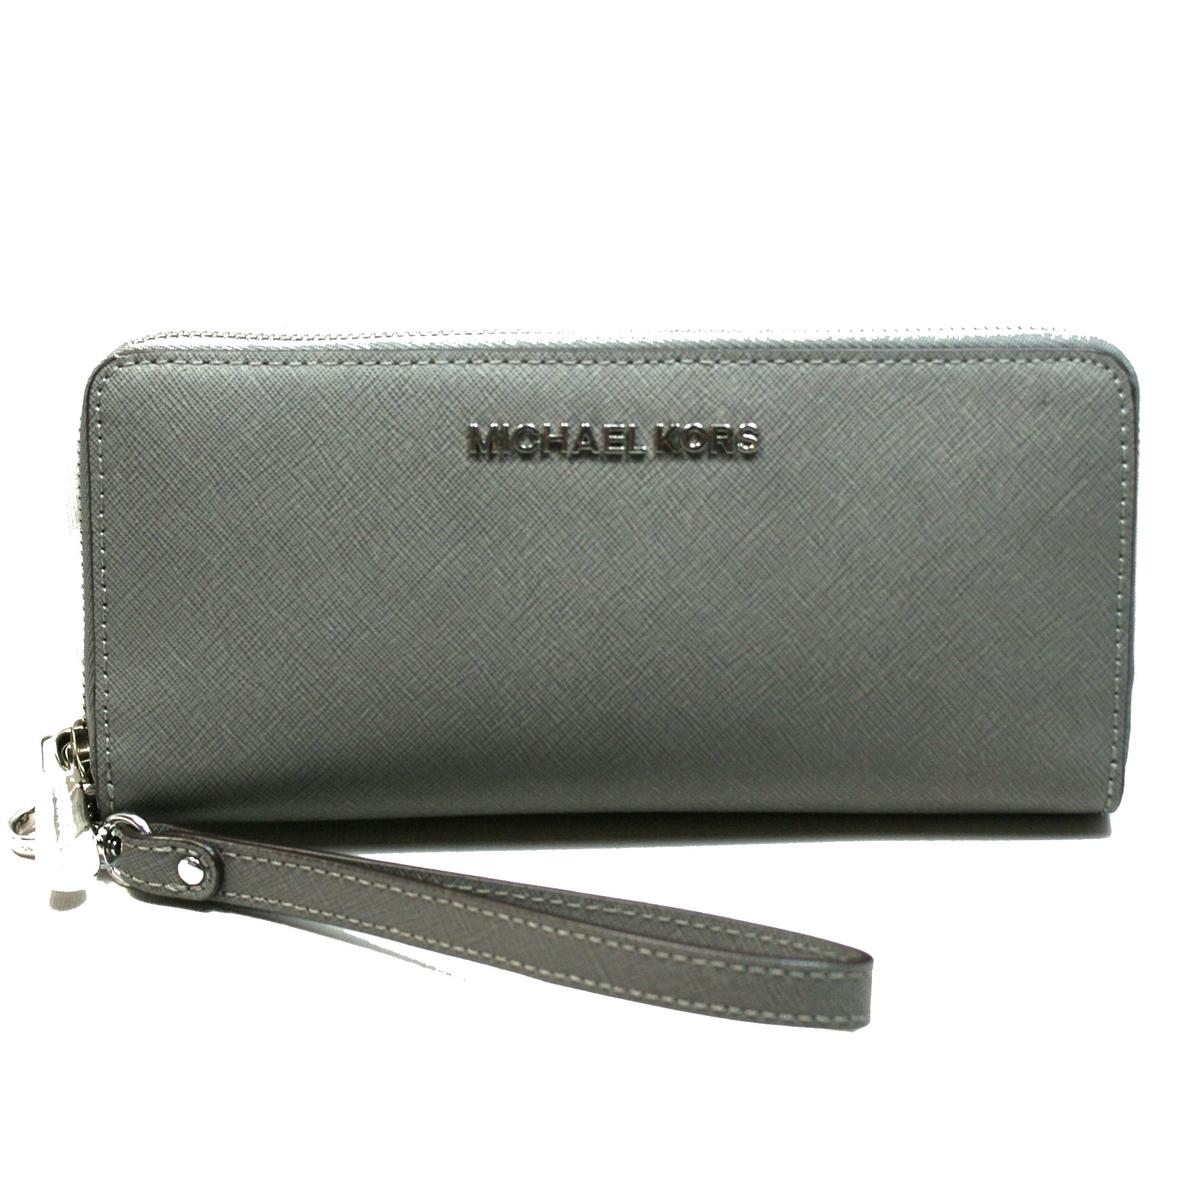 Michael Kors Jet Set Travel Continental Leather Wallet/ Clutch/ Wristlet Steel Grey #32S5STVE9L ...